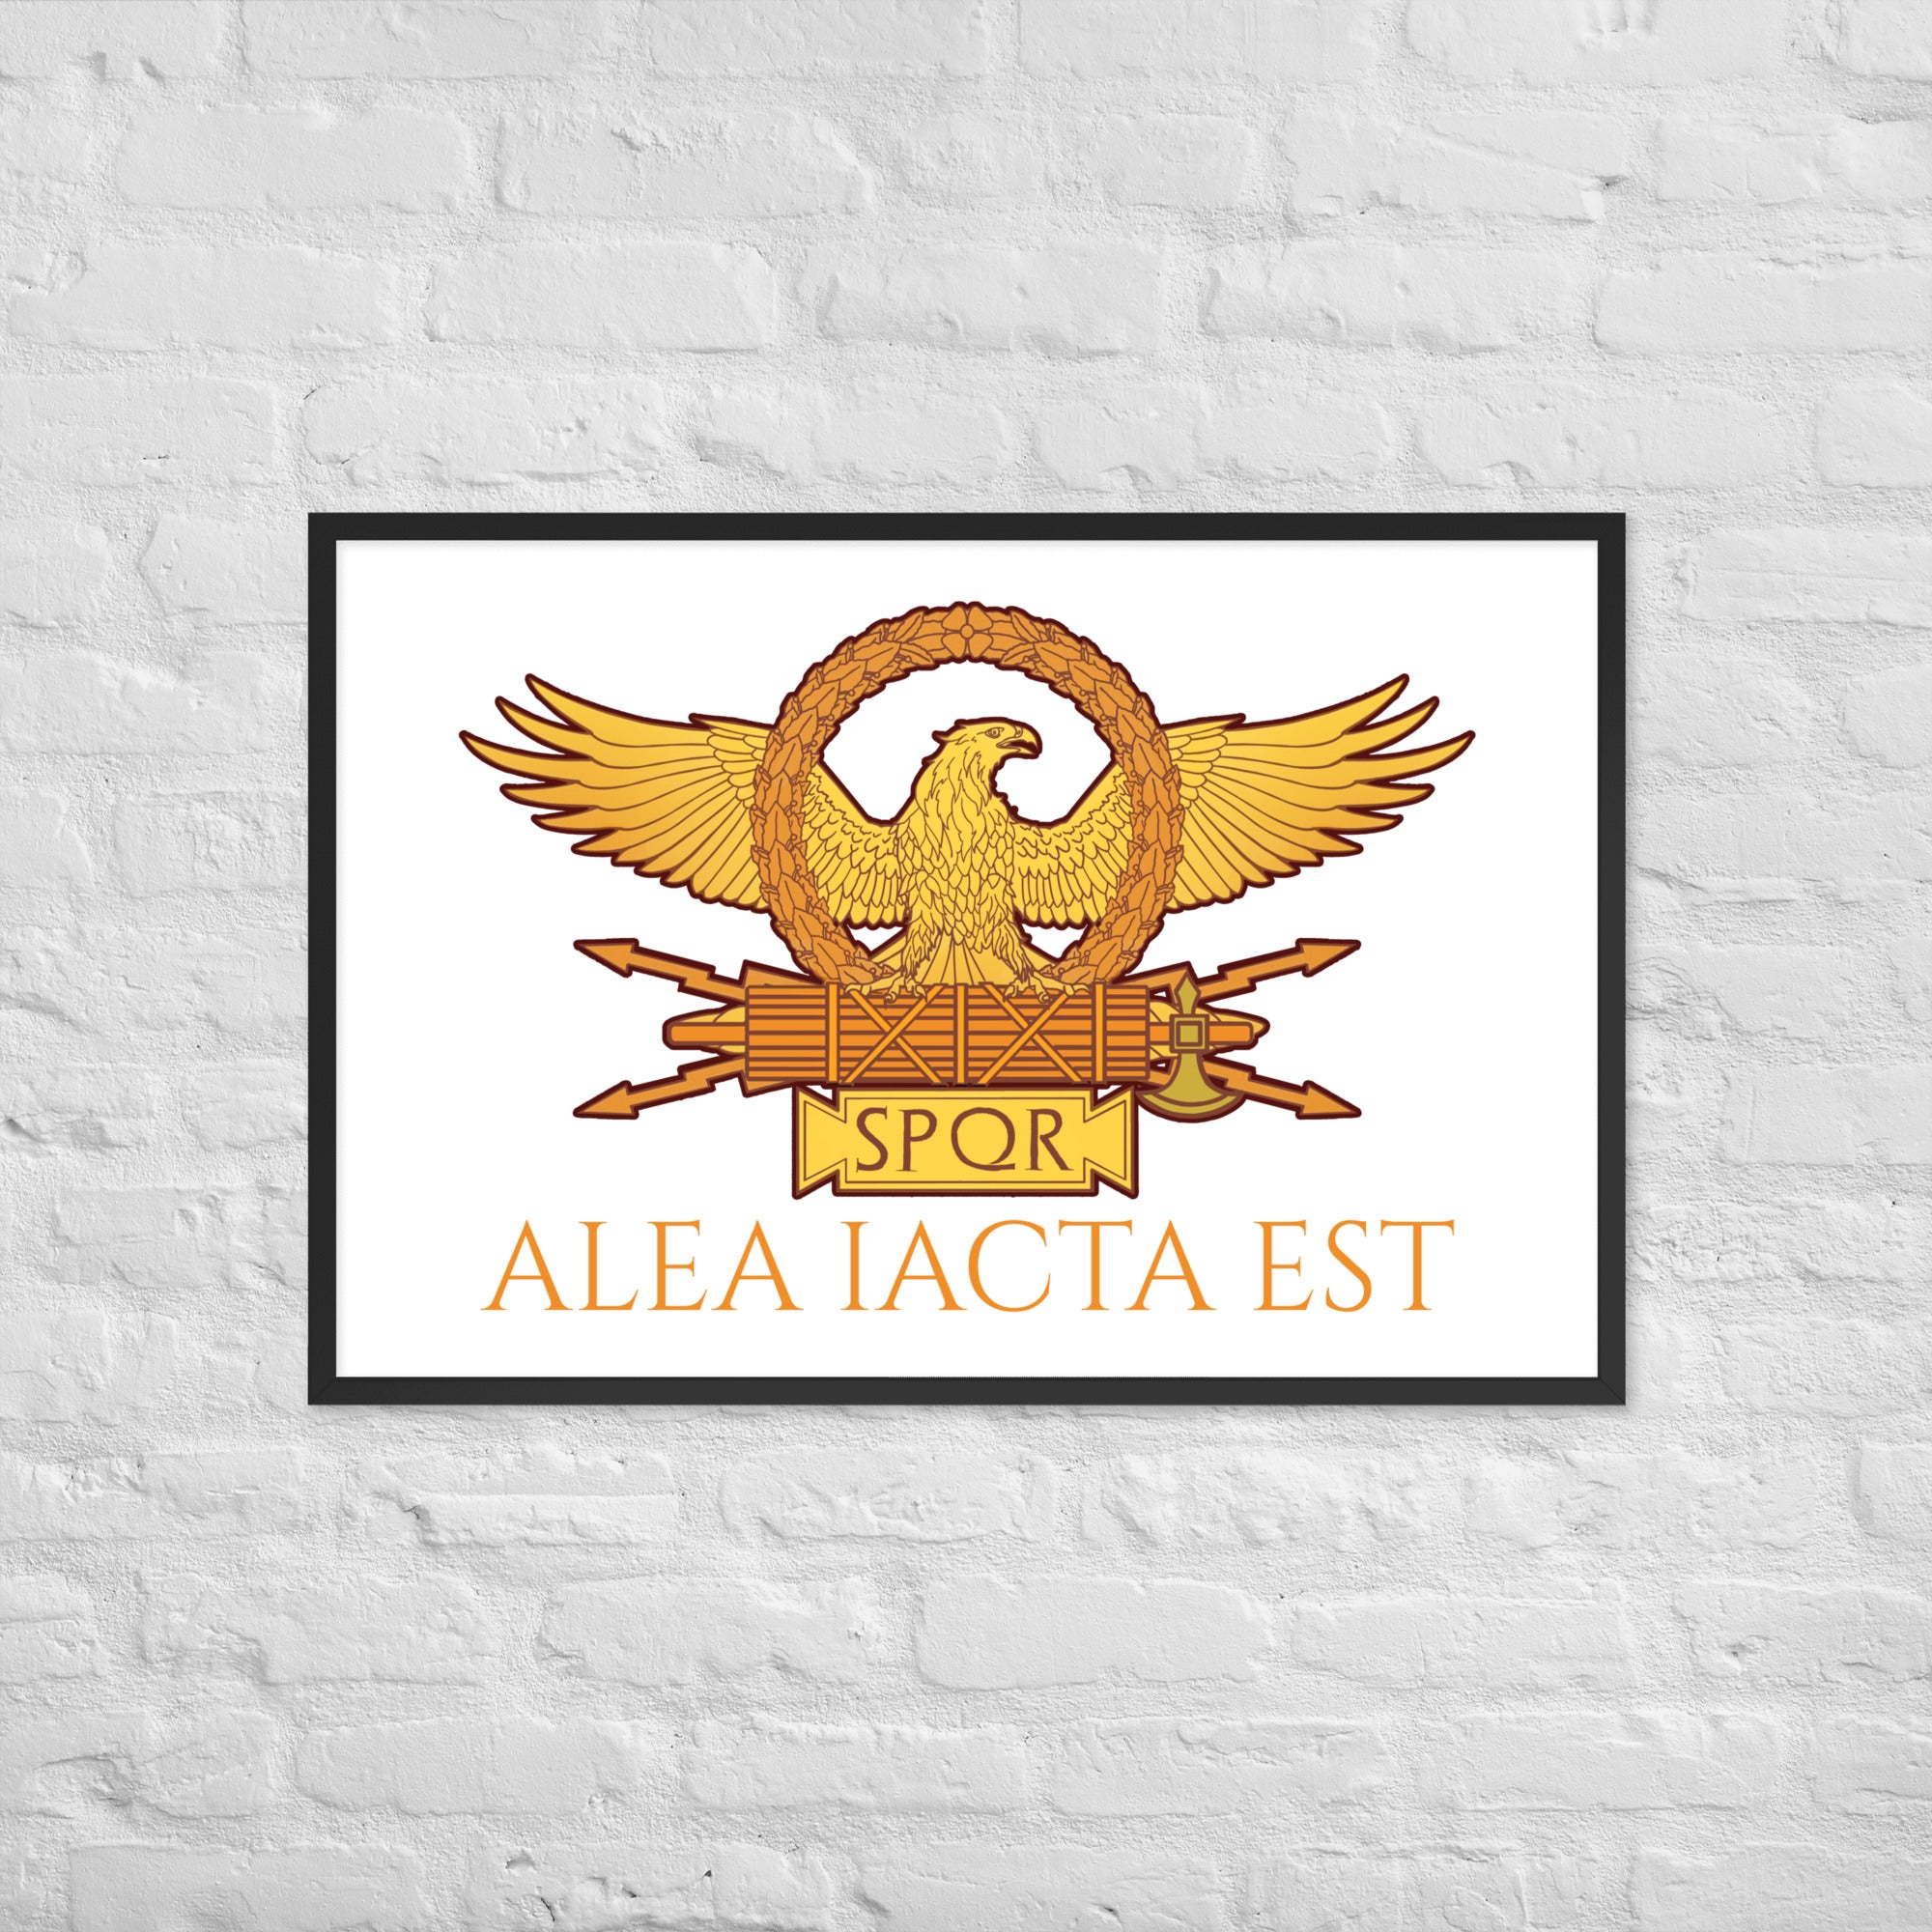 Alea Iacta Est - The Die Is Cast - Julius Caesar - Ancient Rome Framed poster